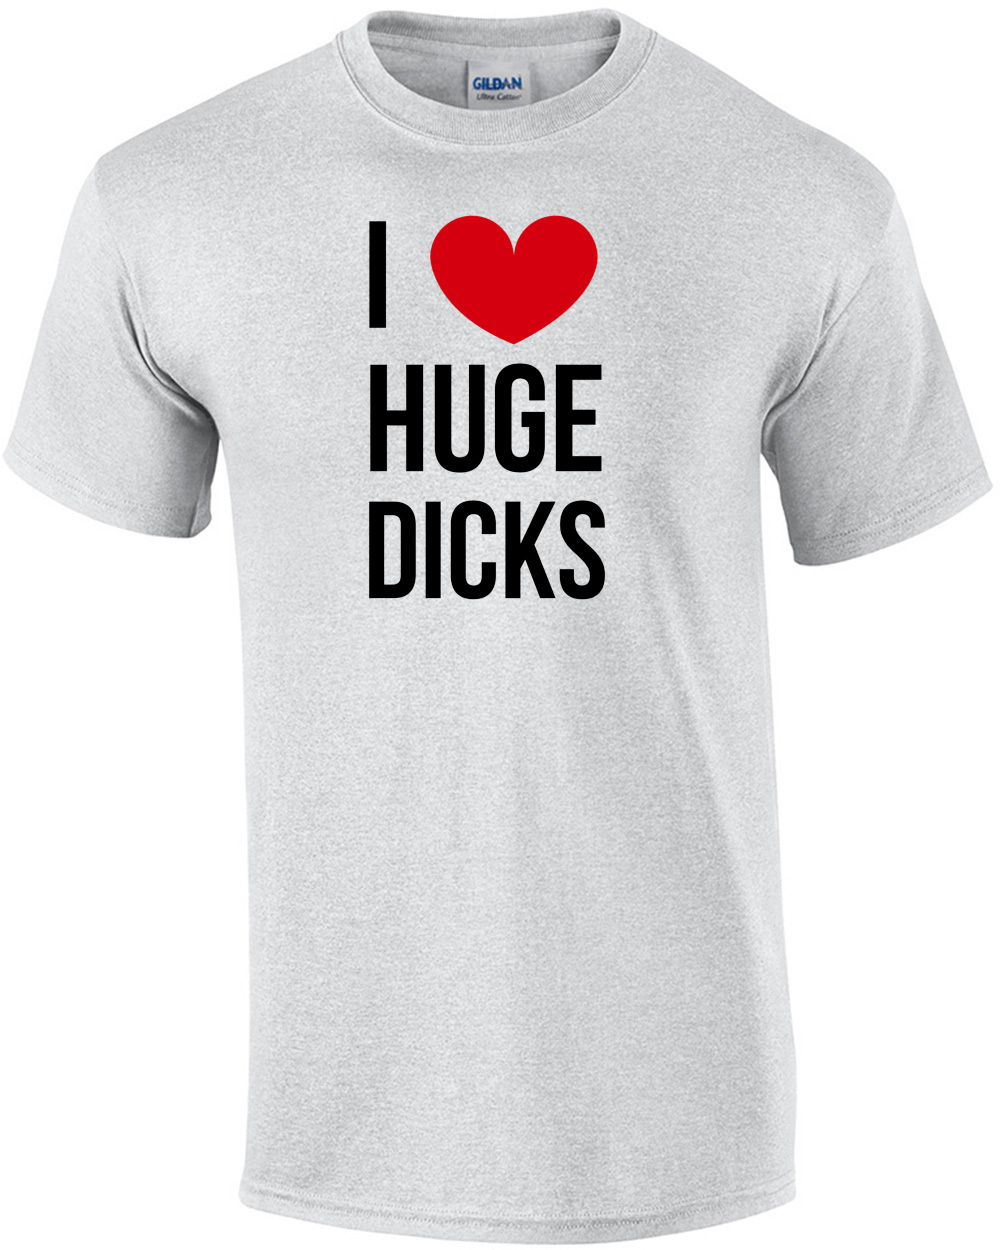 I love huge dicks